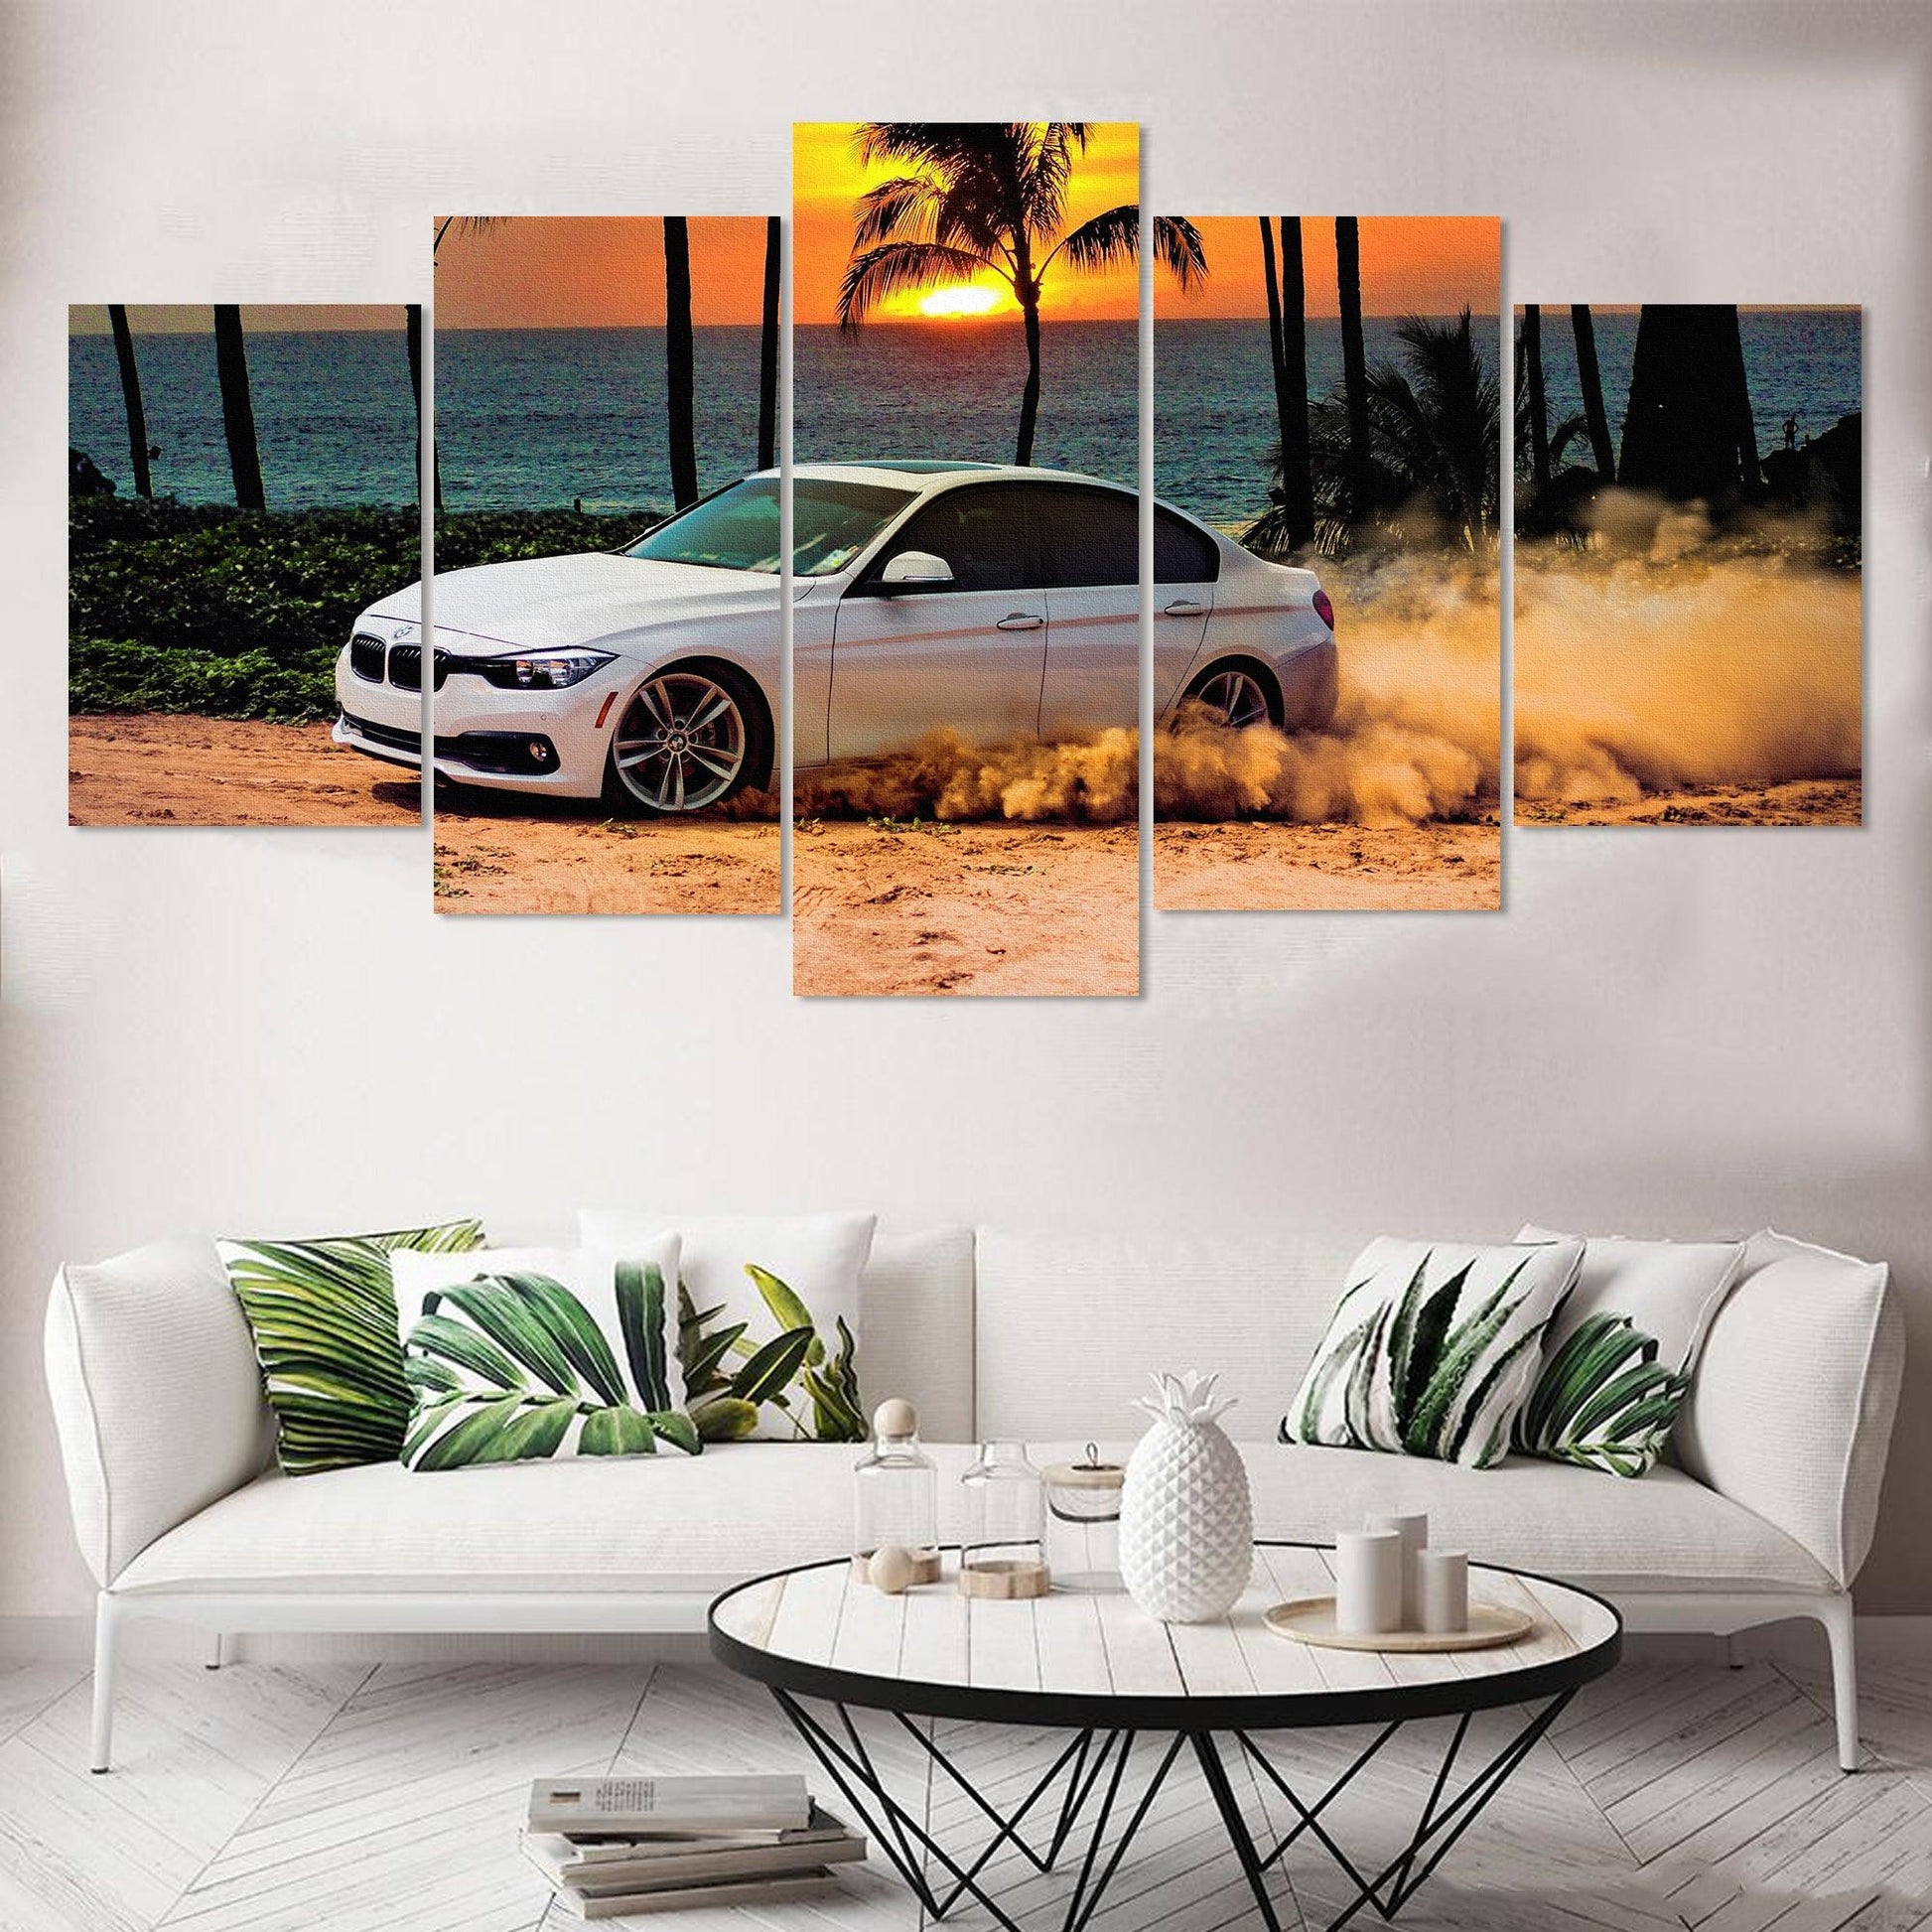 BMW 5 Series Drifting On Beach 5 Panel Canvas Print Wall Art - GotItHere.com